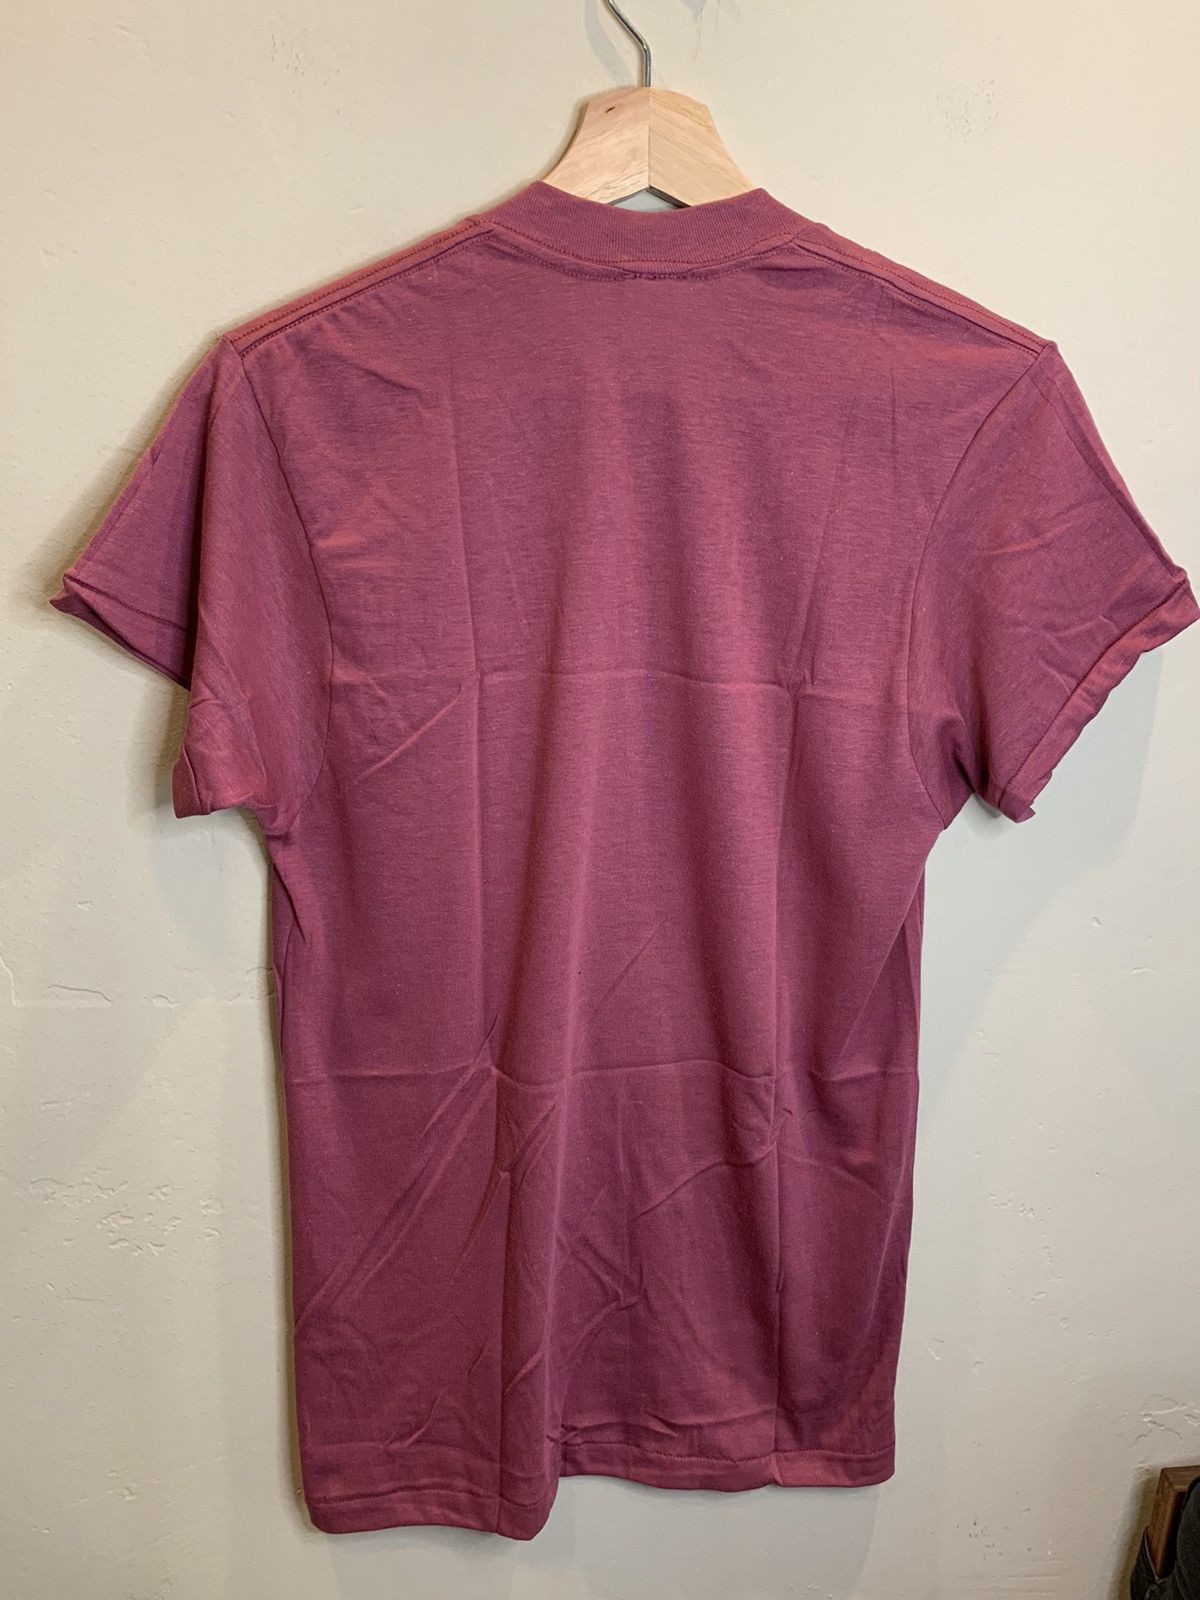 Vintage *RARE* Vintage Lupo Single Stitch USA-Made T-Shirt - Small Size US S / EU 44-46 / 1 - 2 Preview